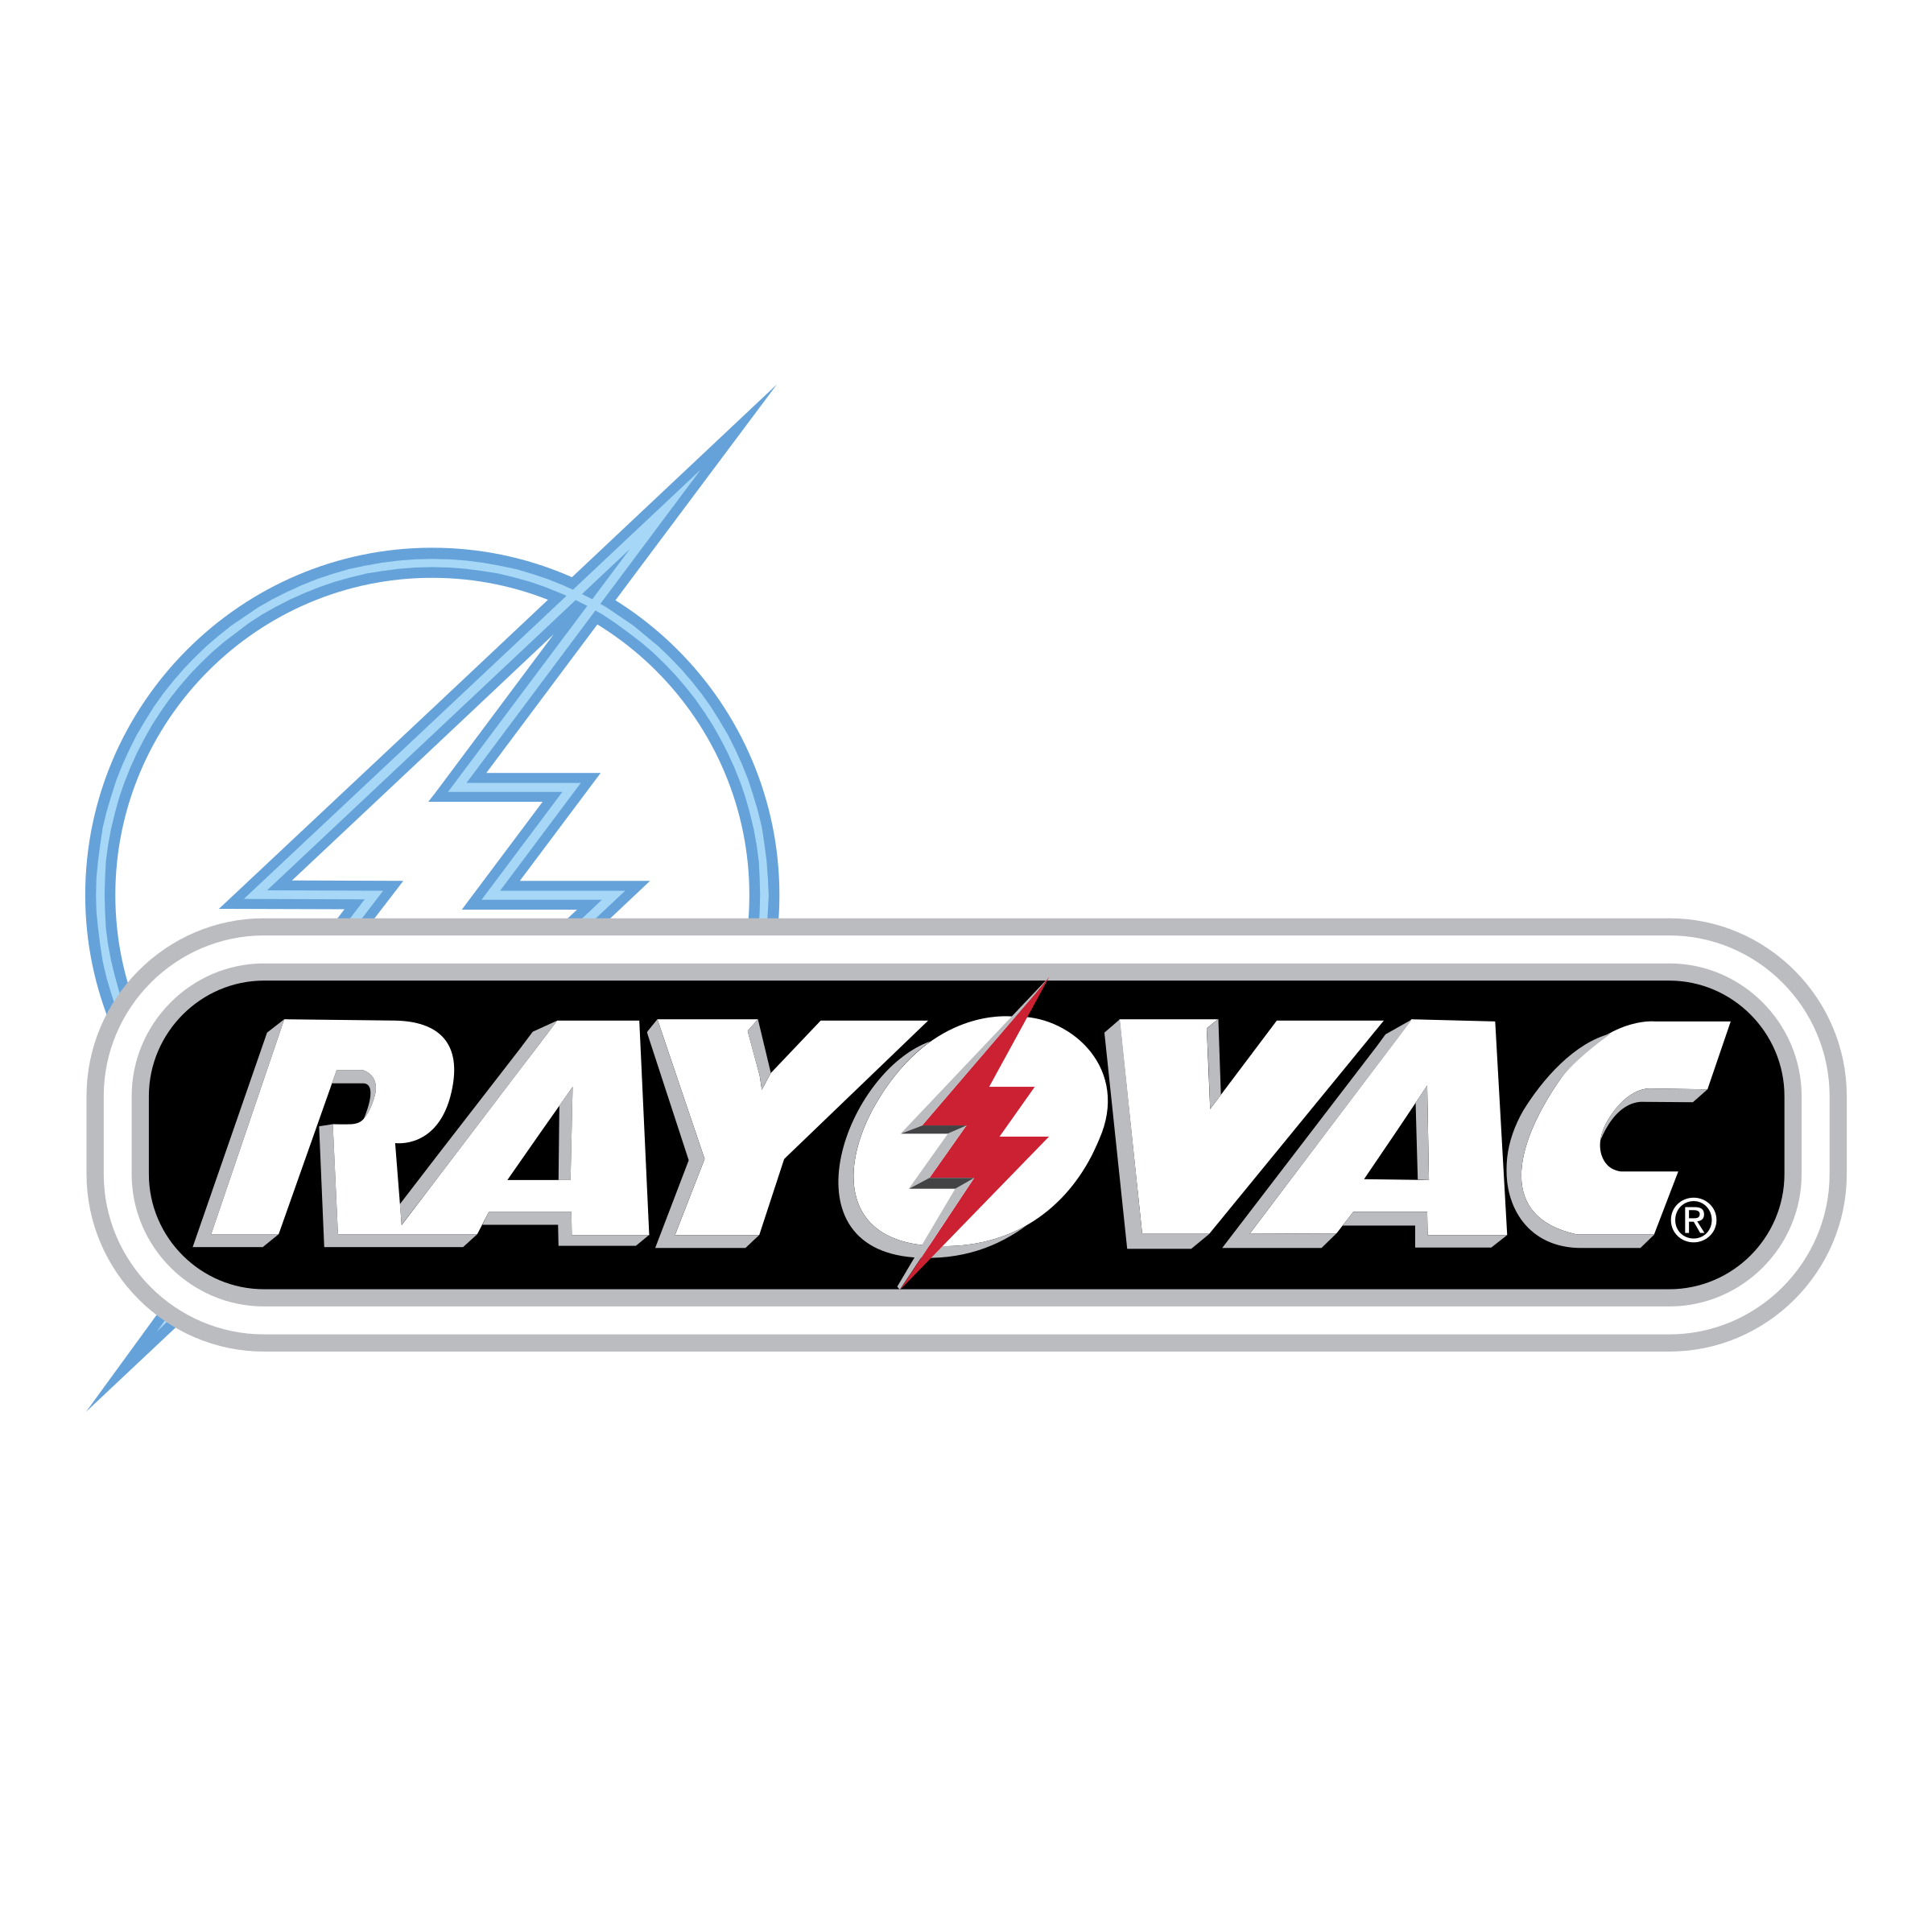 Rayovac Logo - Rayovac Logo PNG Transparent & SVG Vector - Freebie Supply